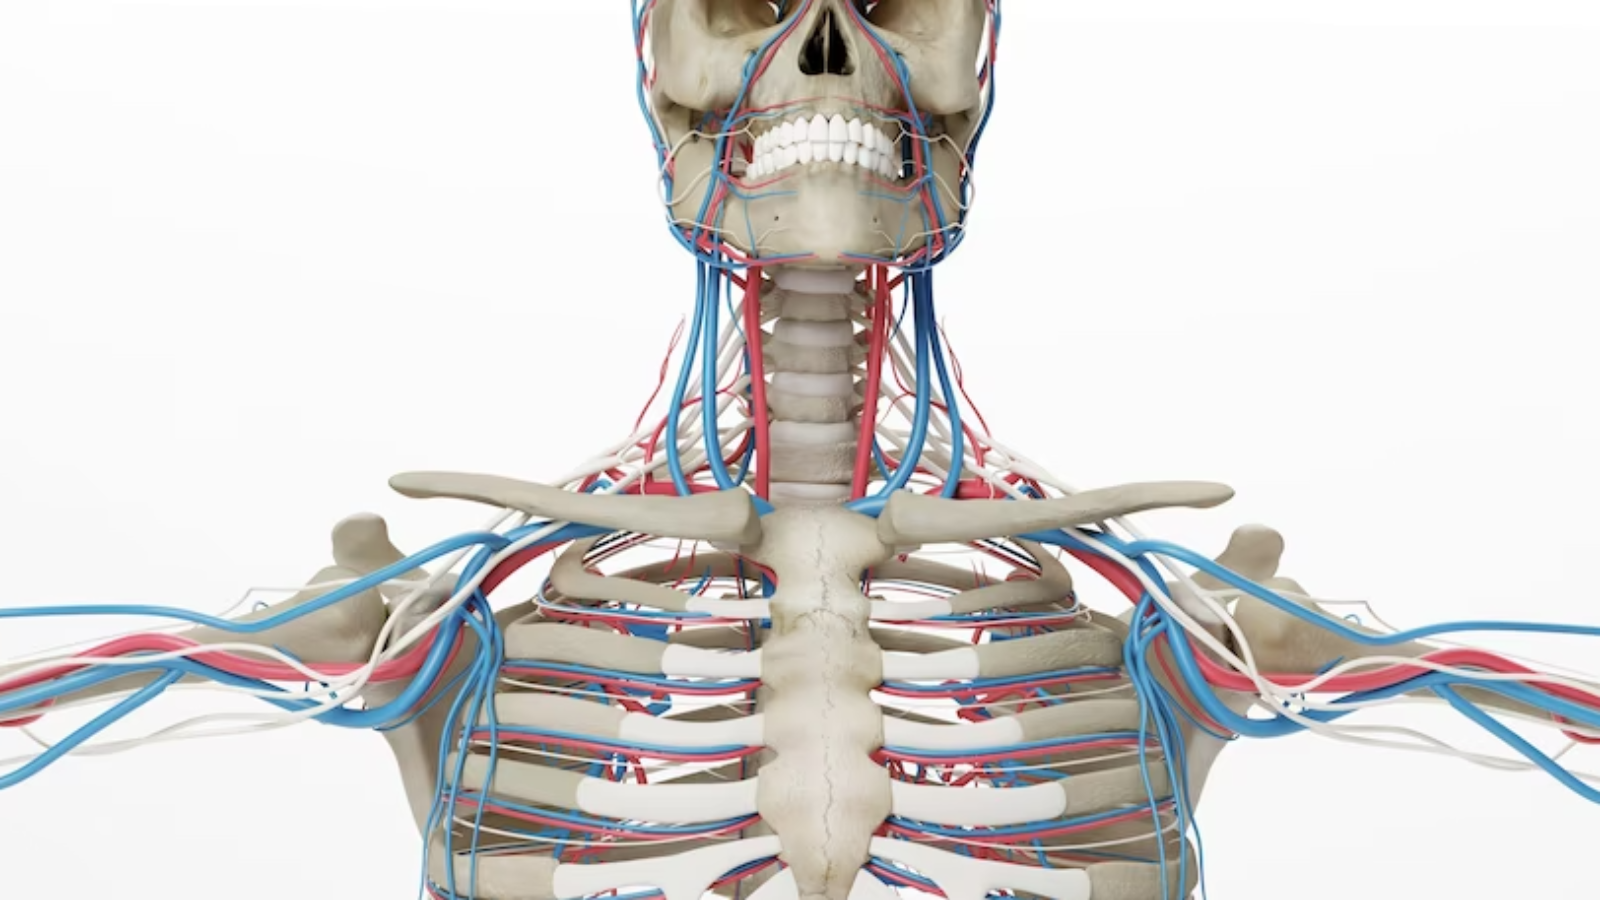 cinema-4d-rendering-arteries-human-skeleton-isolated-white-background_534278-15-jpg-826×459-